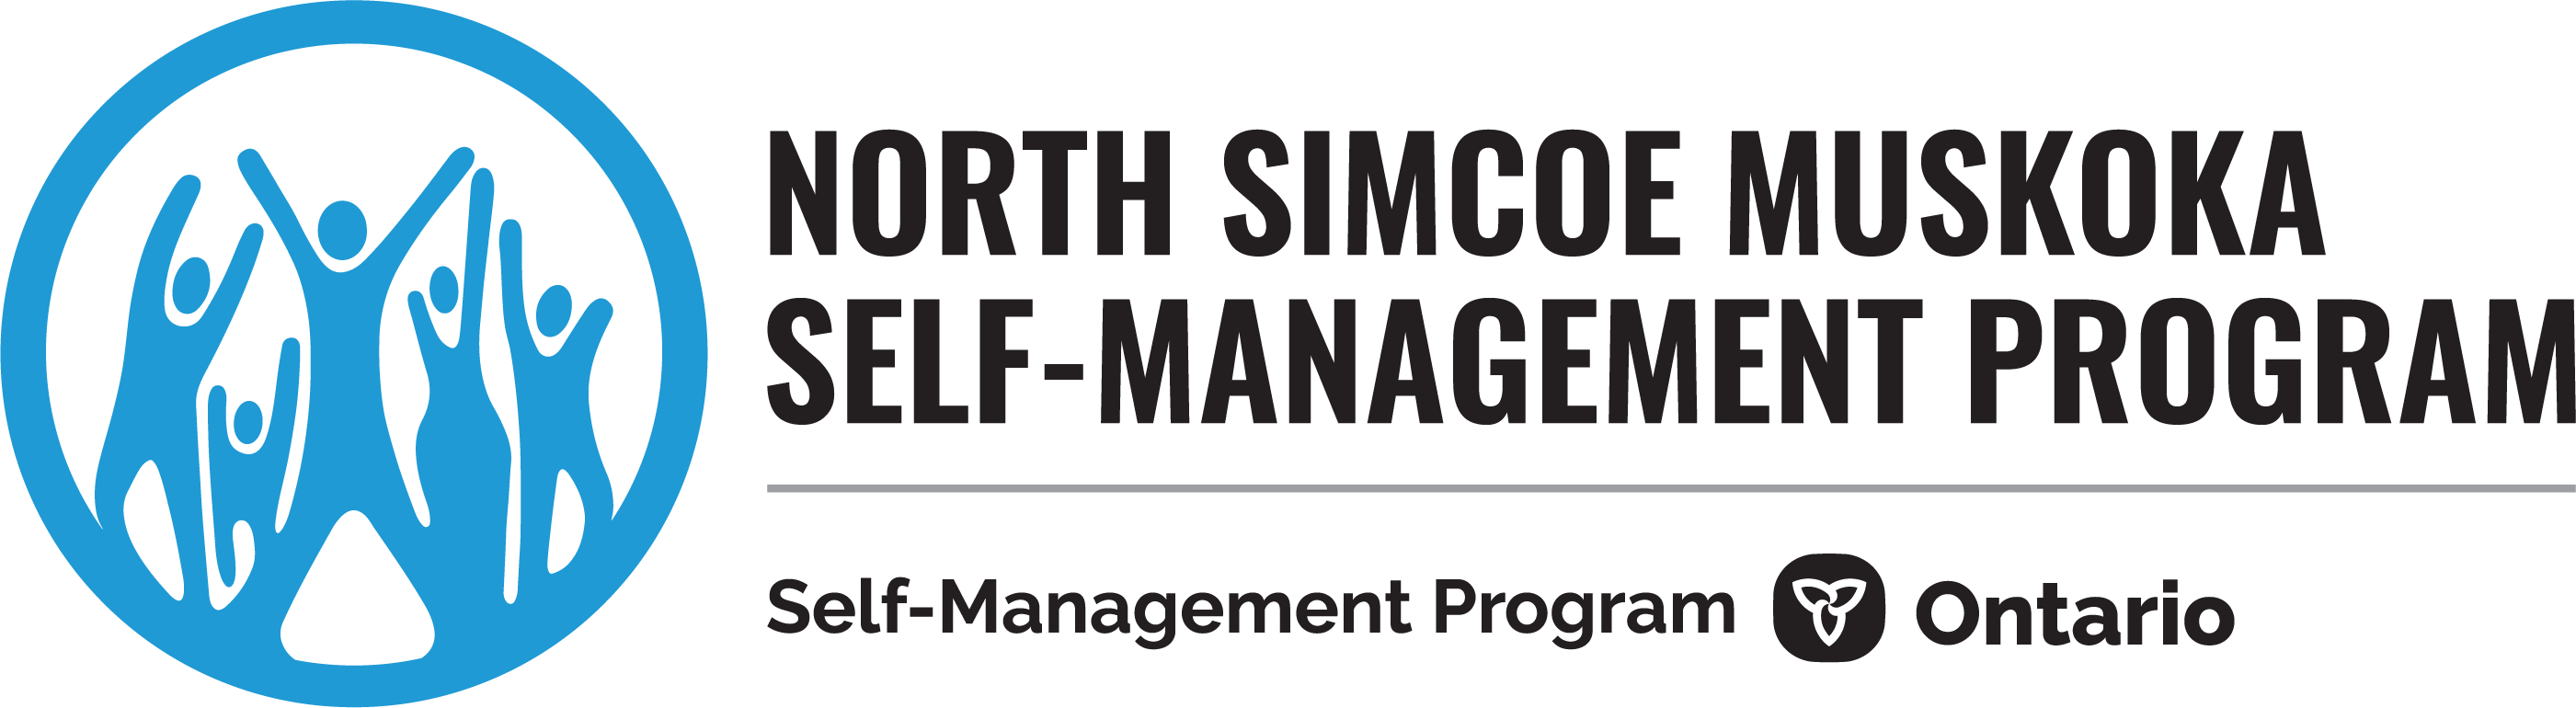 North Simcoe Muskoka self-management program logo